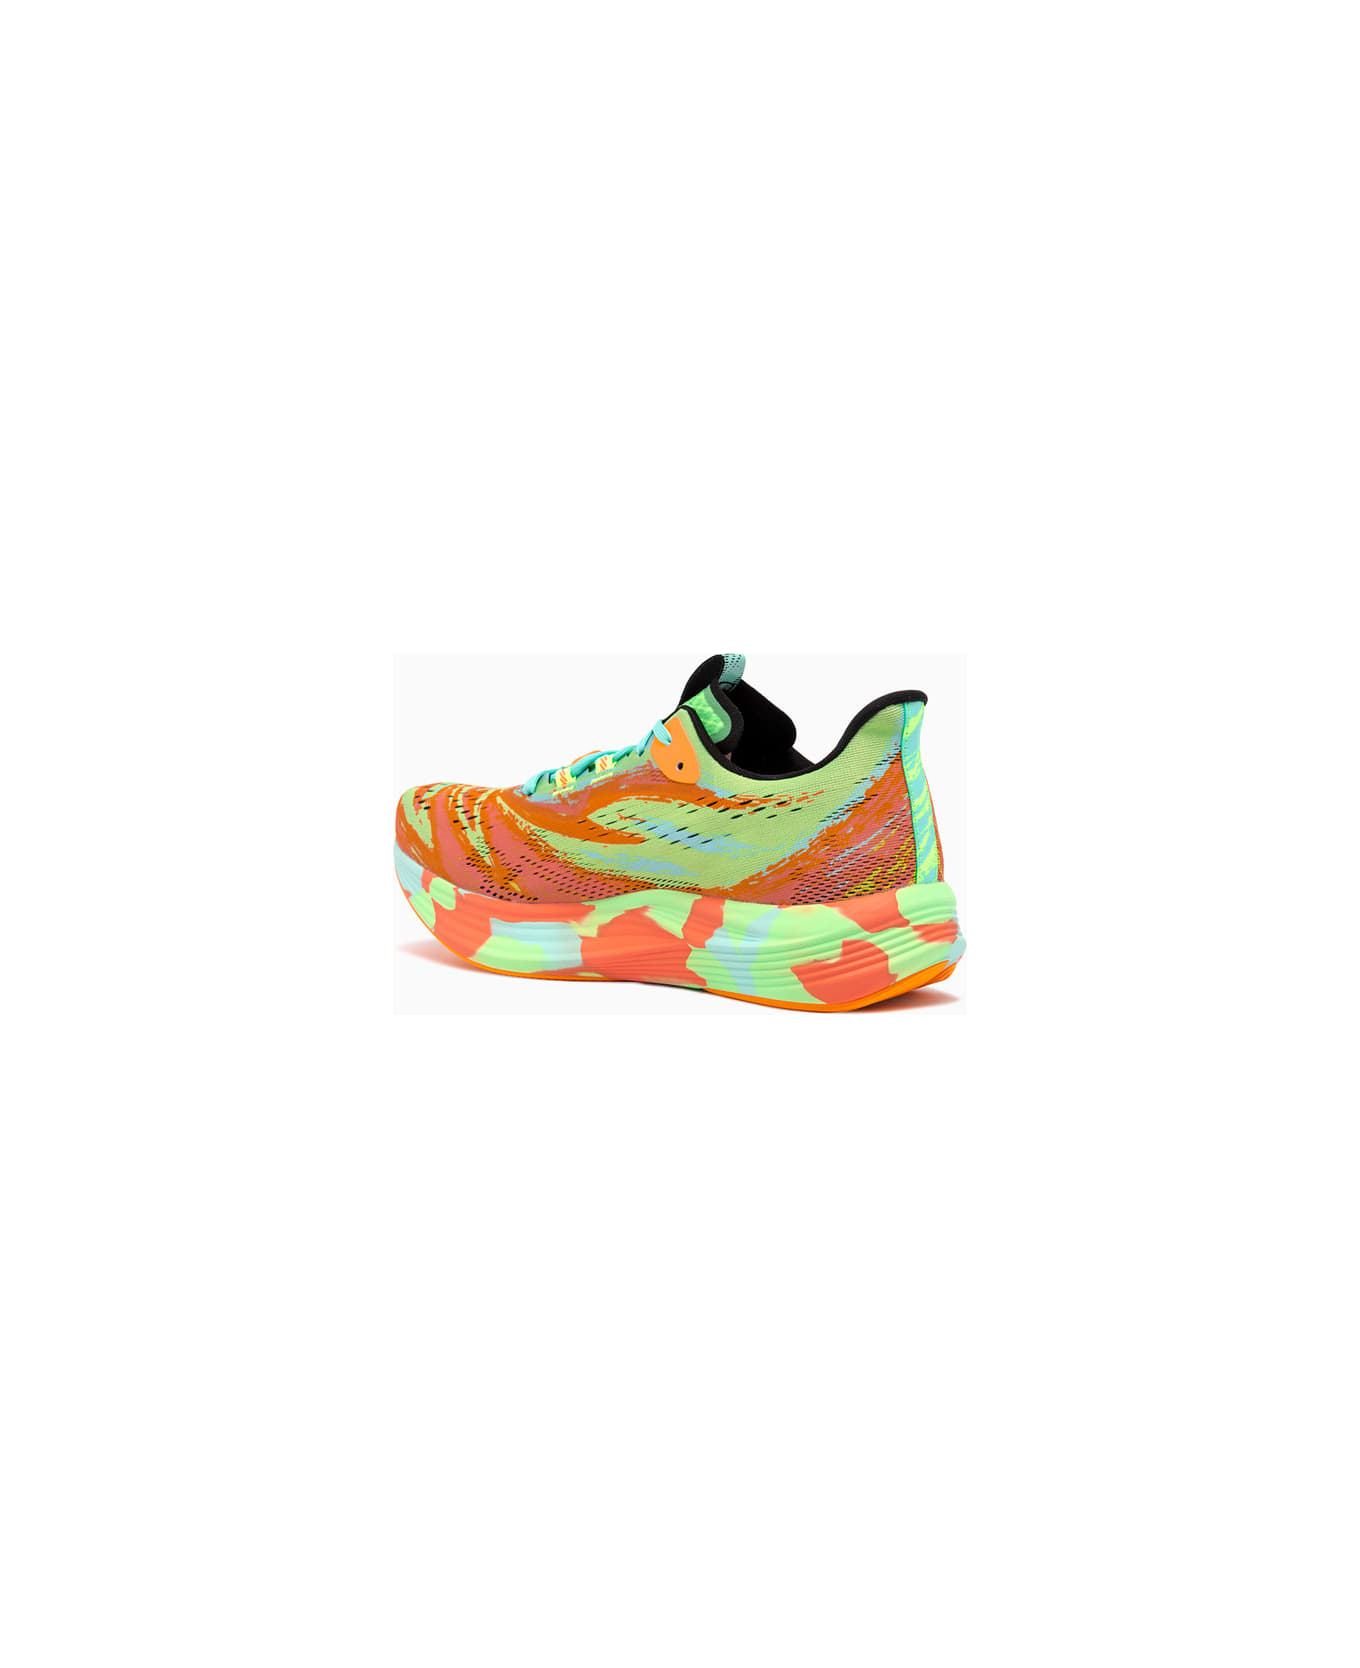 Asics Noosa Tri 15 Sneakers 1011b609-301 - Lime Burst/illuminate Mint スニーカー